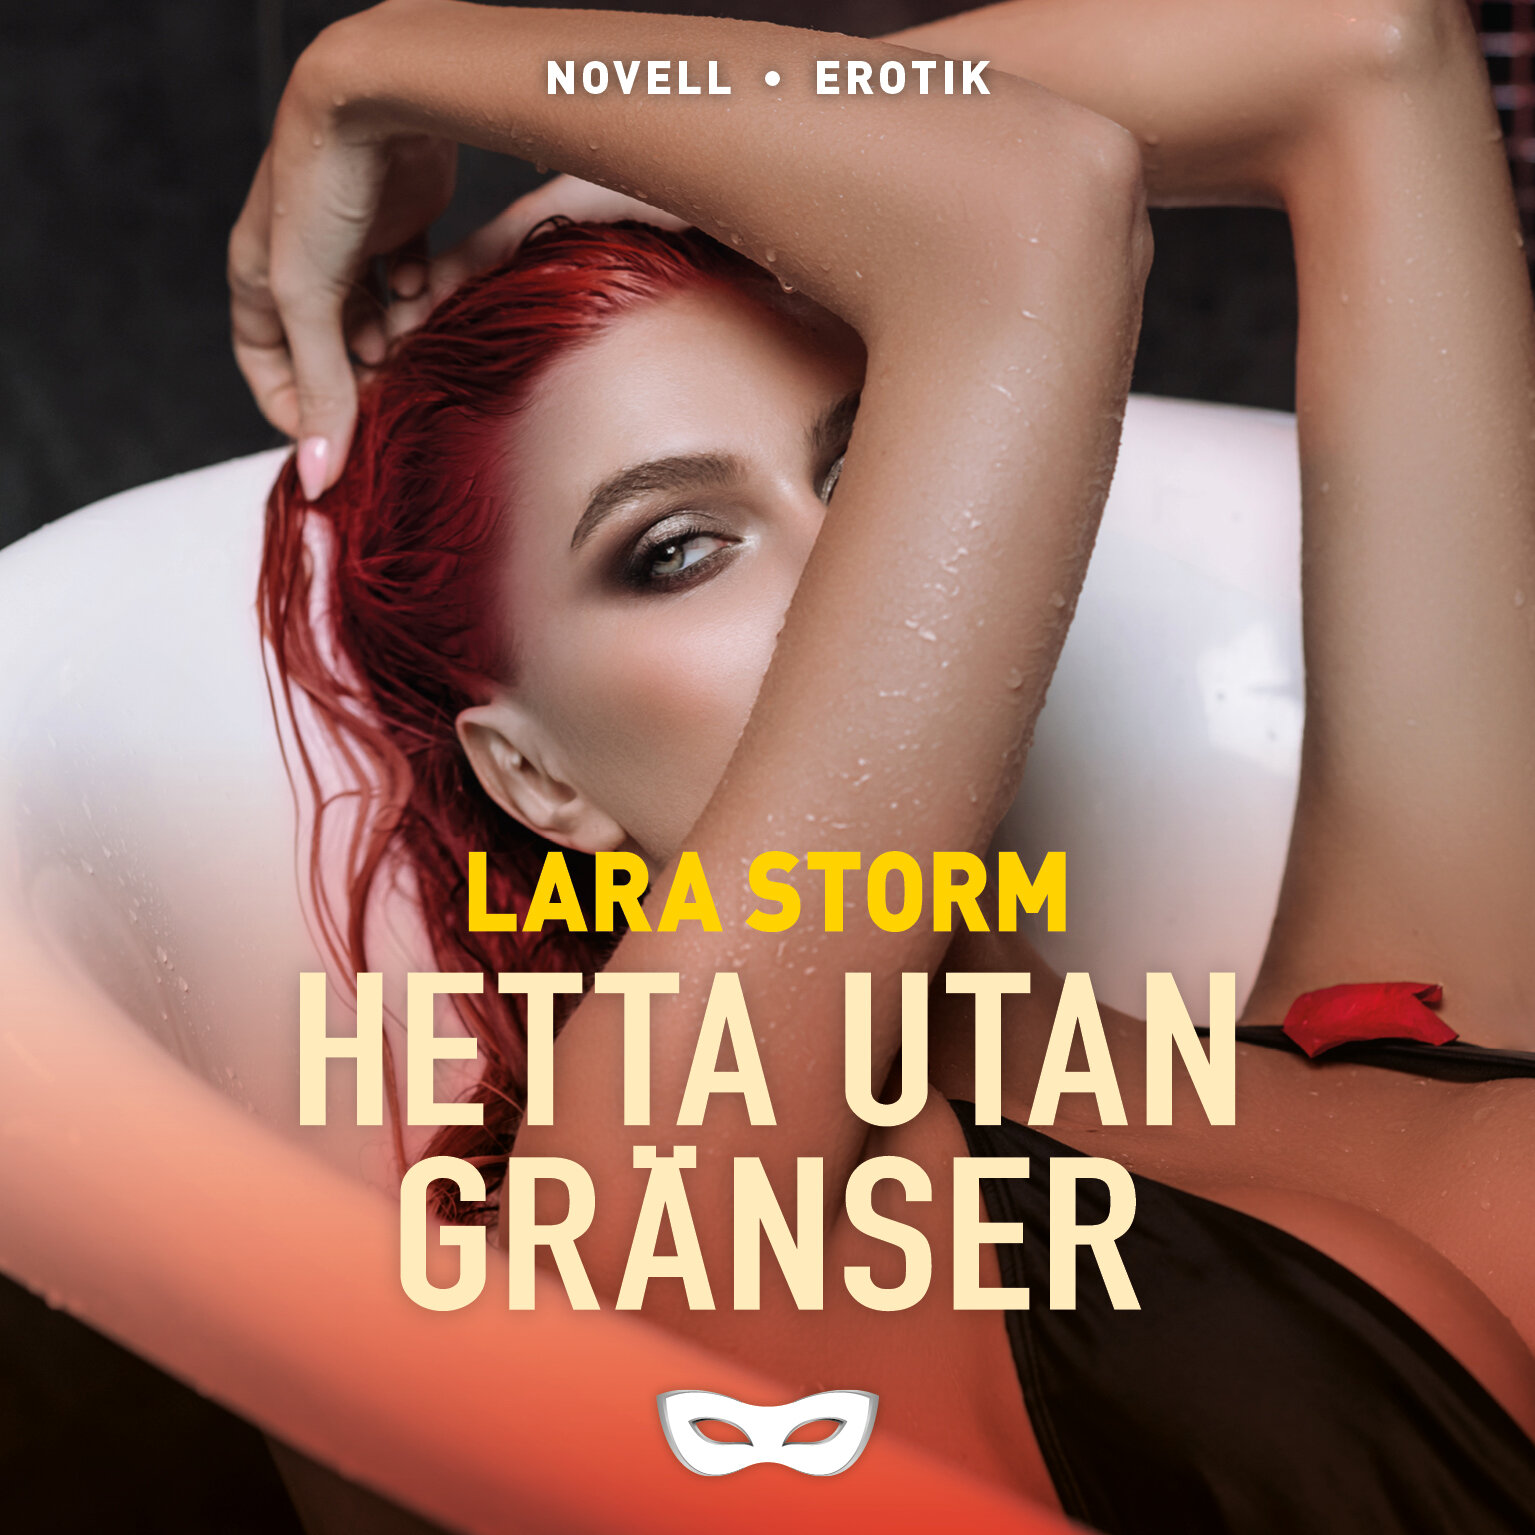 Lara Storm